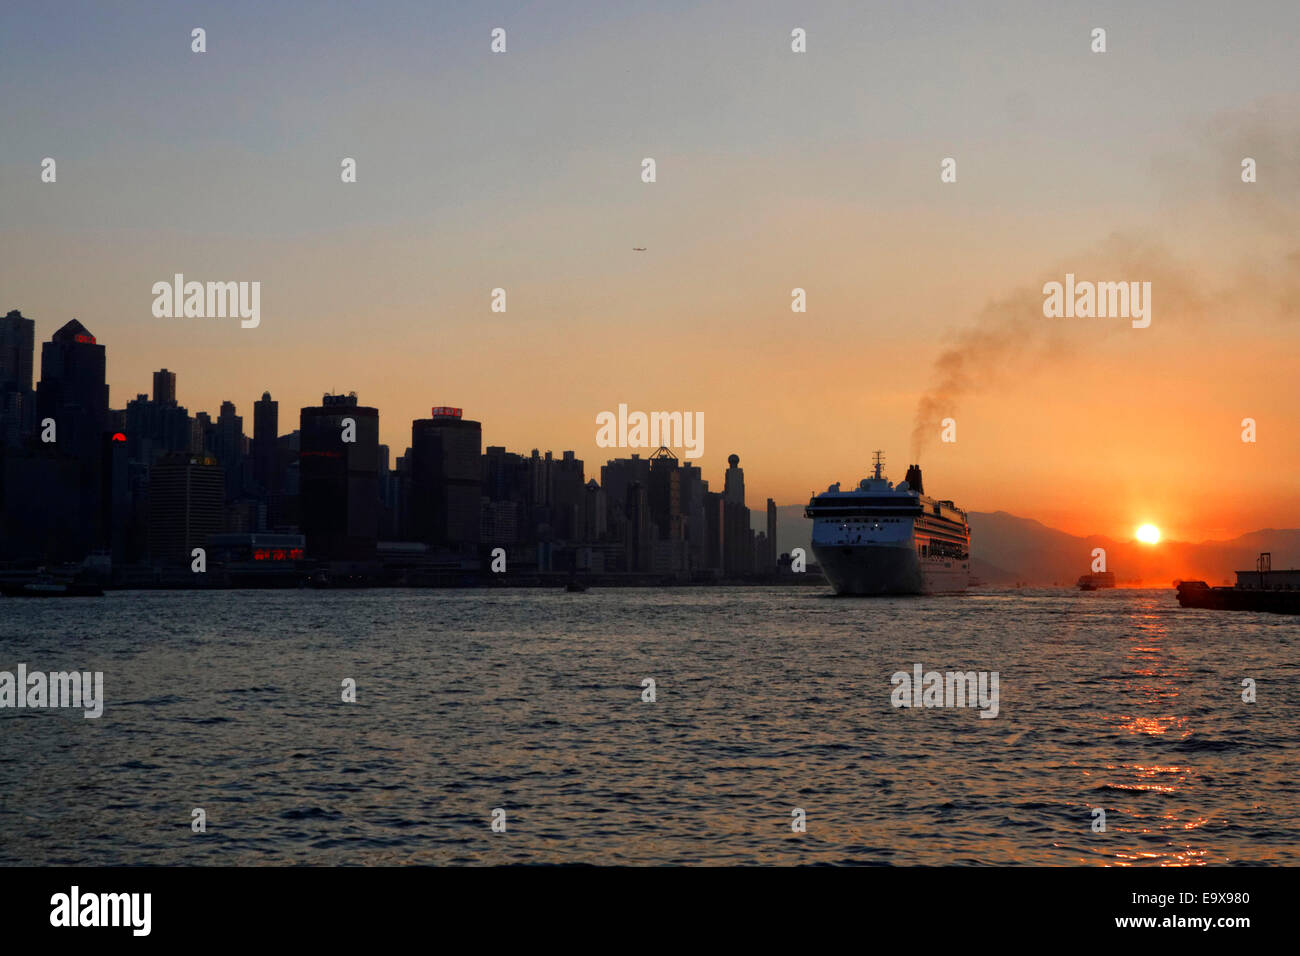 A cruise ship depart Hong Kong harbour at sunset. Stock Photo